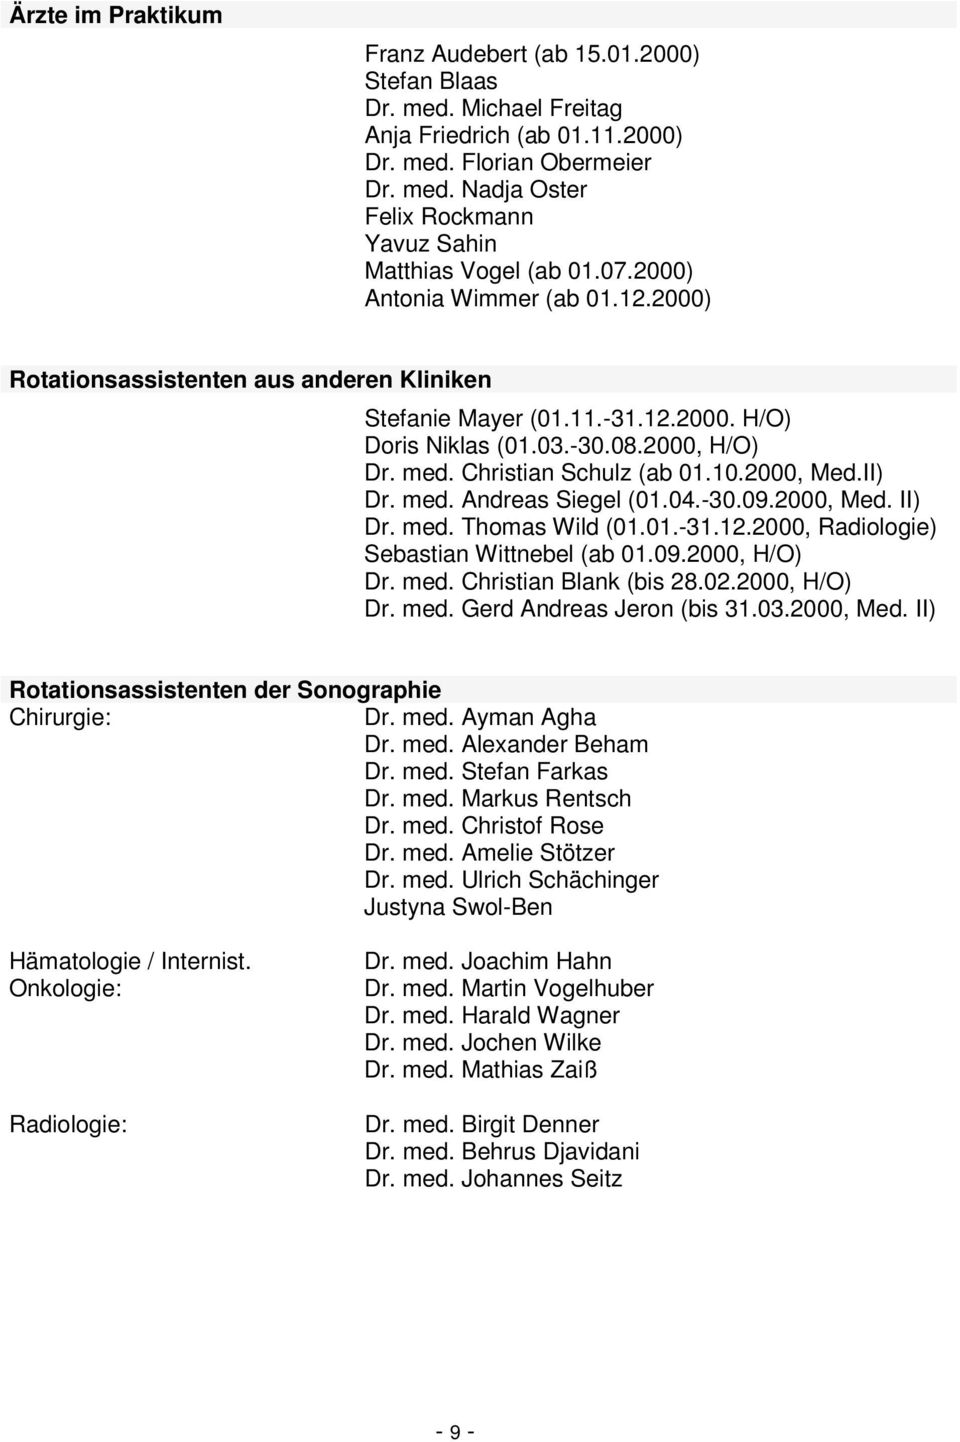 2000, Med.II) Dr. med. Andreas Siegel (01.04.-30.09.2000, Med. II) Dr. med. Thomas Wild (01.01.-31.12.2000, Radiologie) Sebastian Wittnebel (ab 01.09.2000, H/O) Dr. med. Christian Blank (bis 28.02.